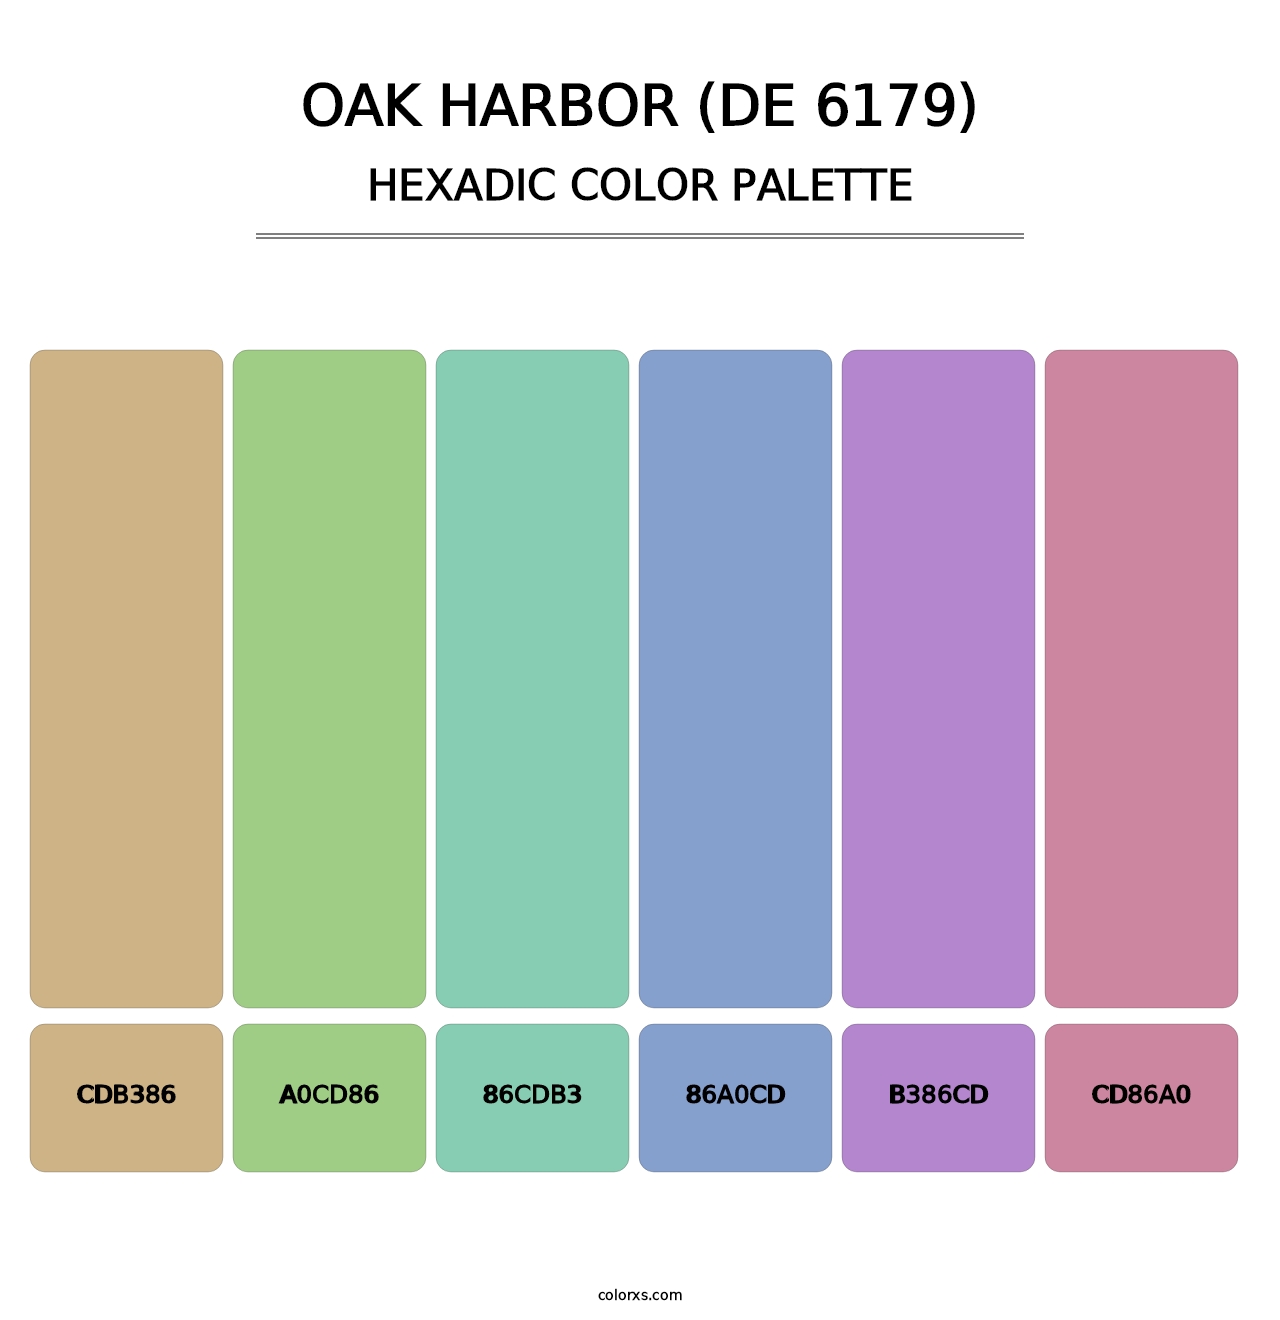 Oak Harbor (DE 6179) - Hexadic Color Palette